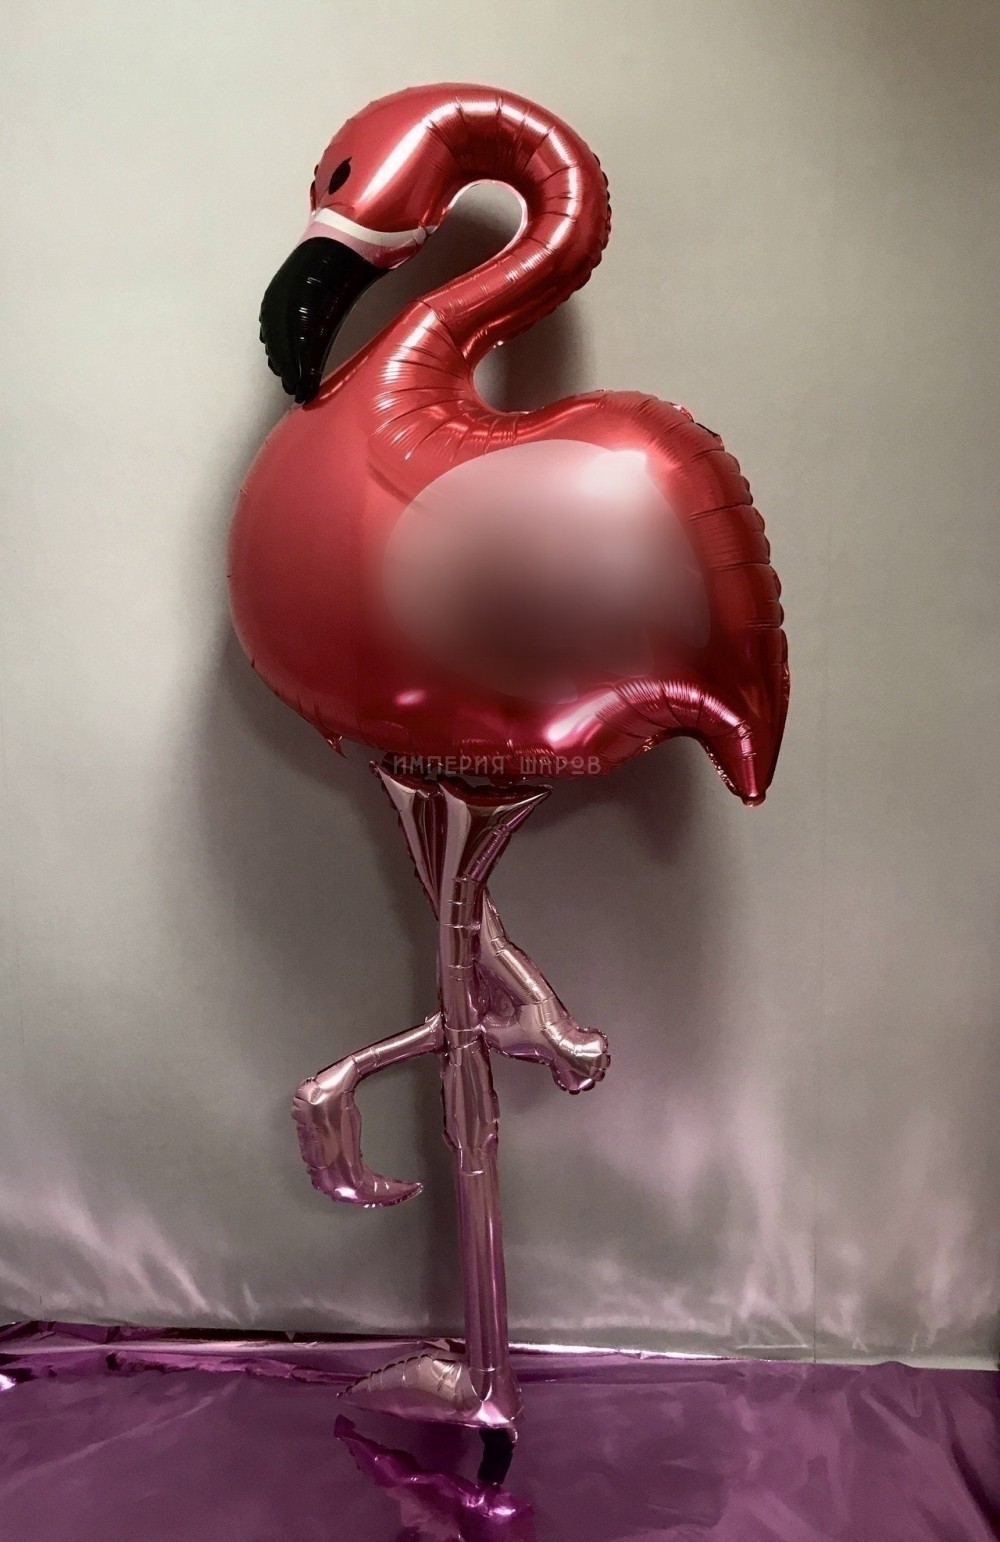 Ходячая фигура Фламинго